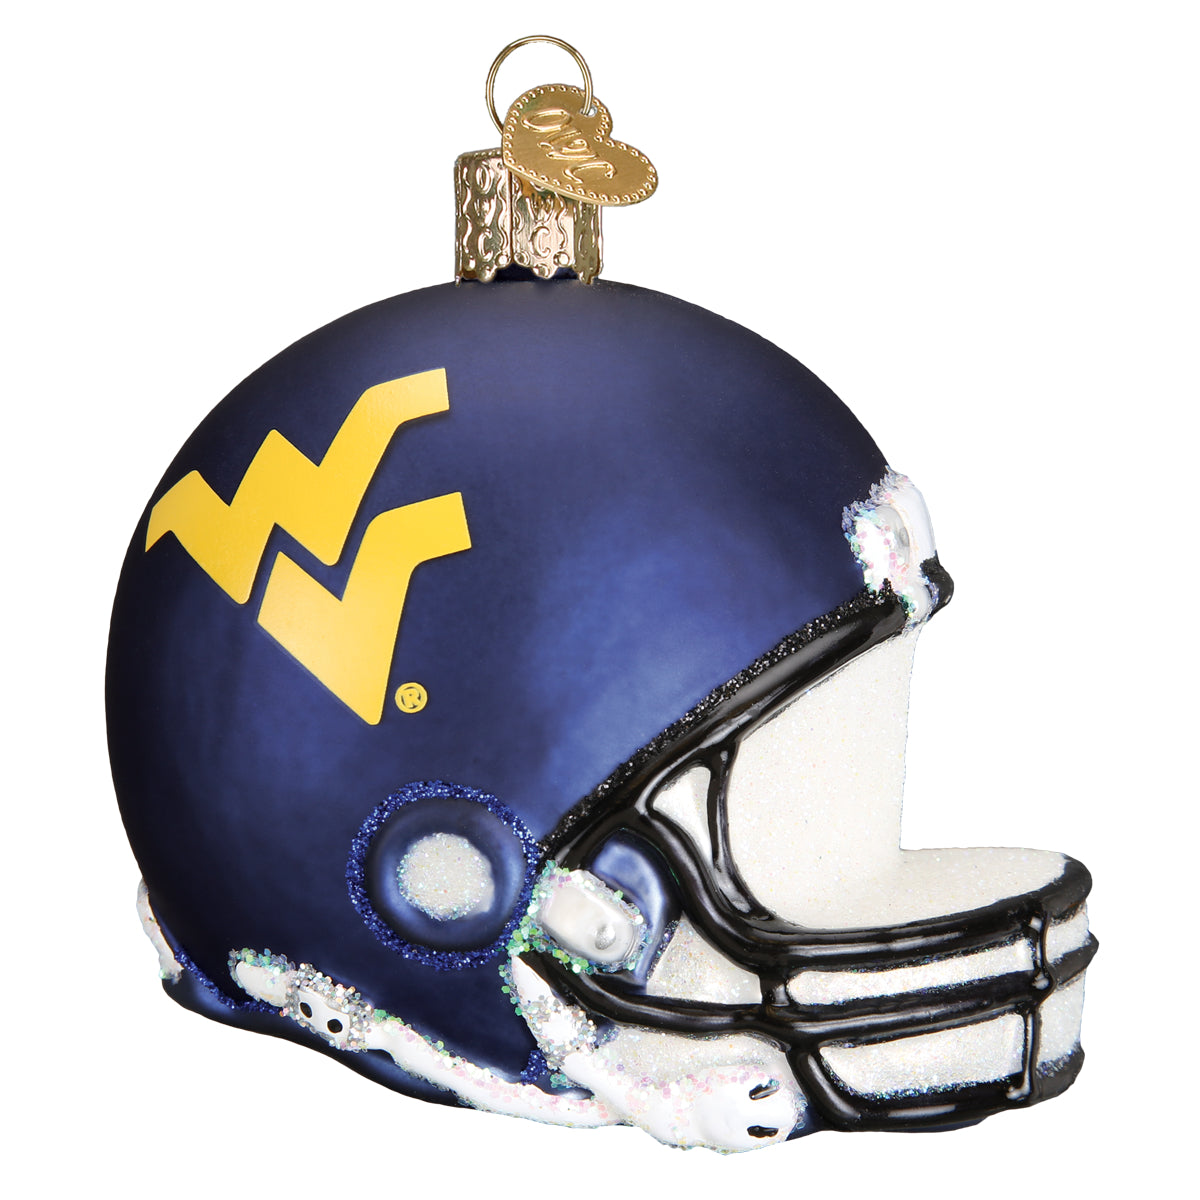 West Virginia Helmet Ornament